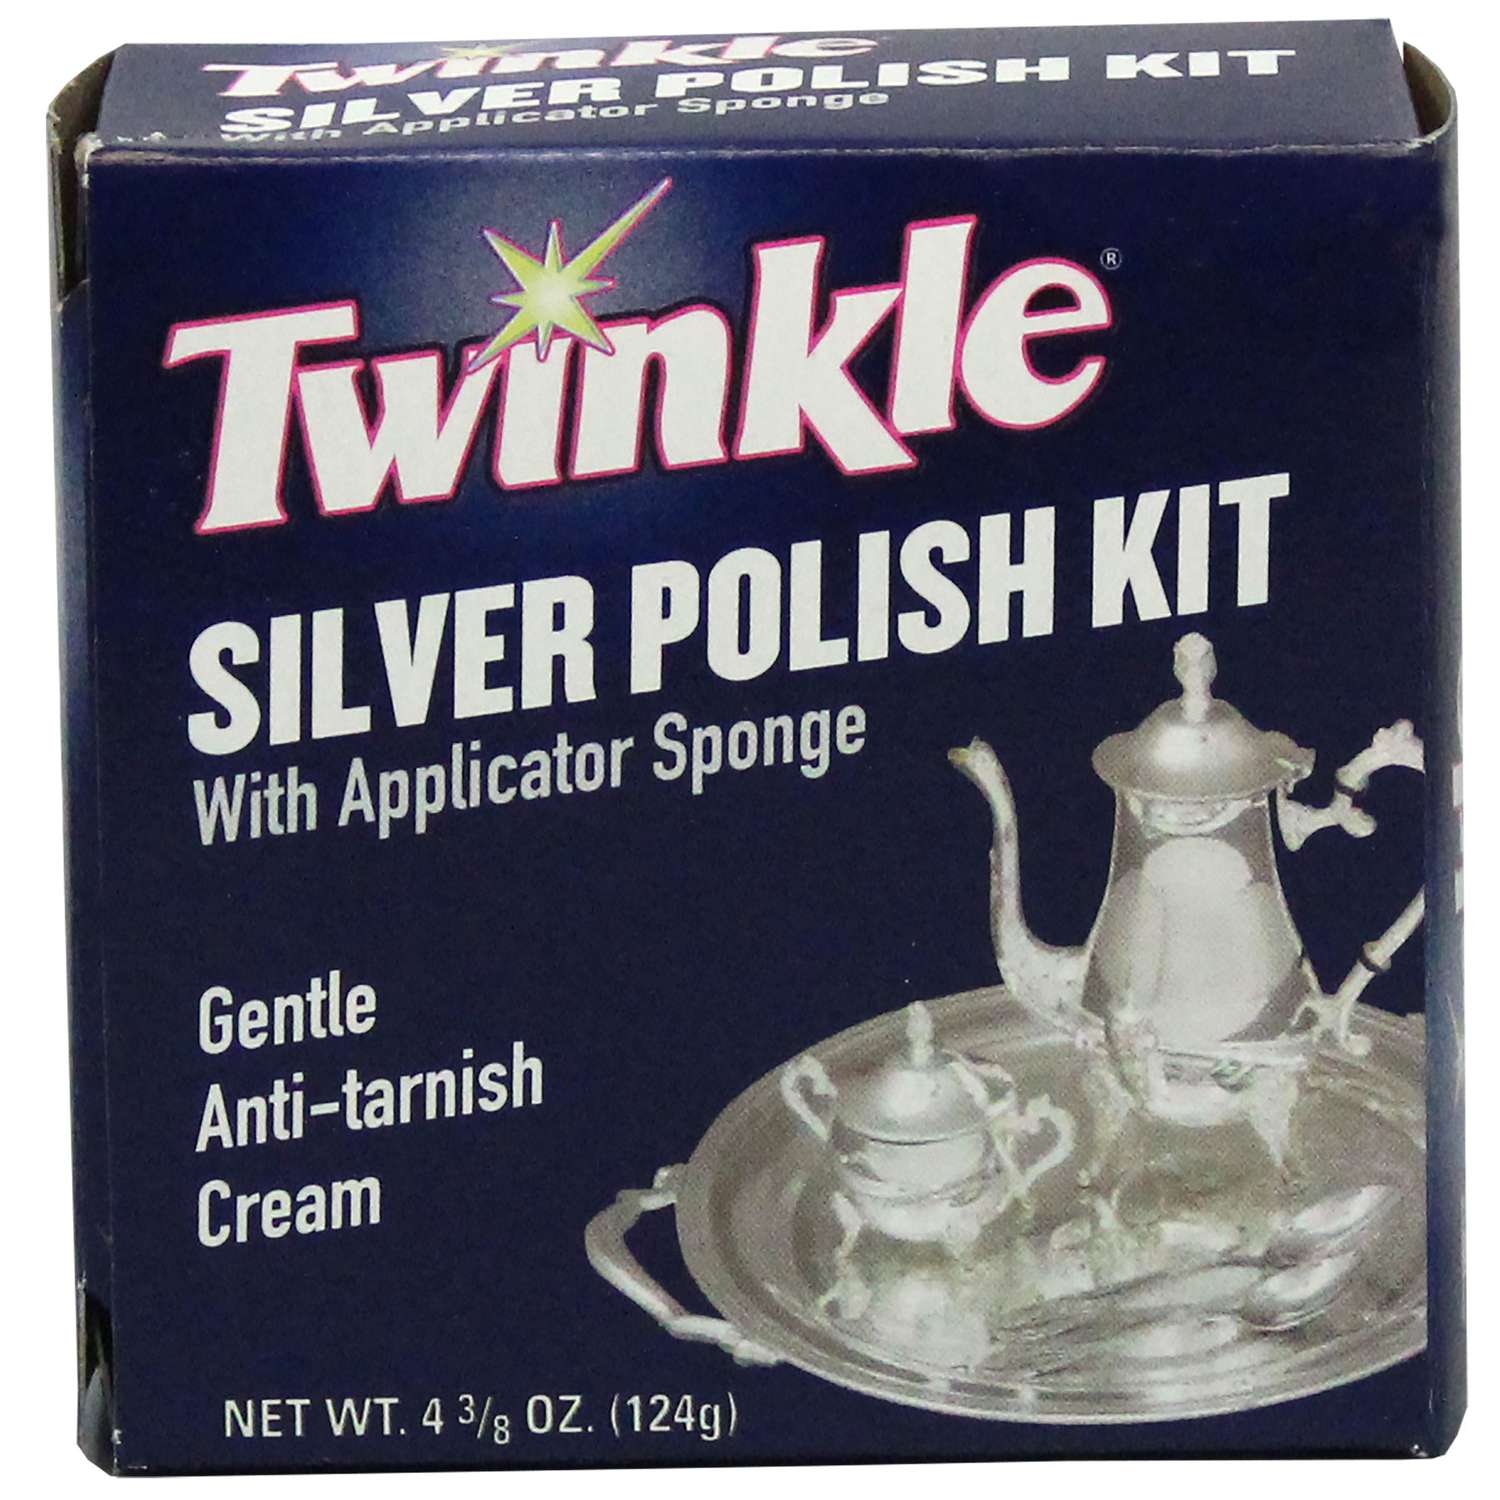 Twinkle Silver Polish 트윙클 실버폴리쉬 (악기청소 클리너 크리너)-11번가 모바일